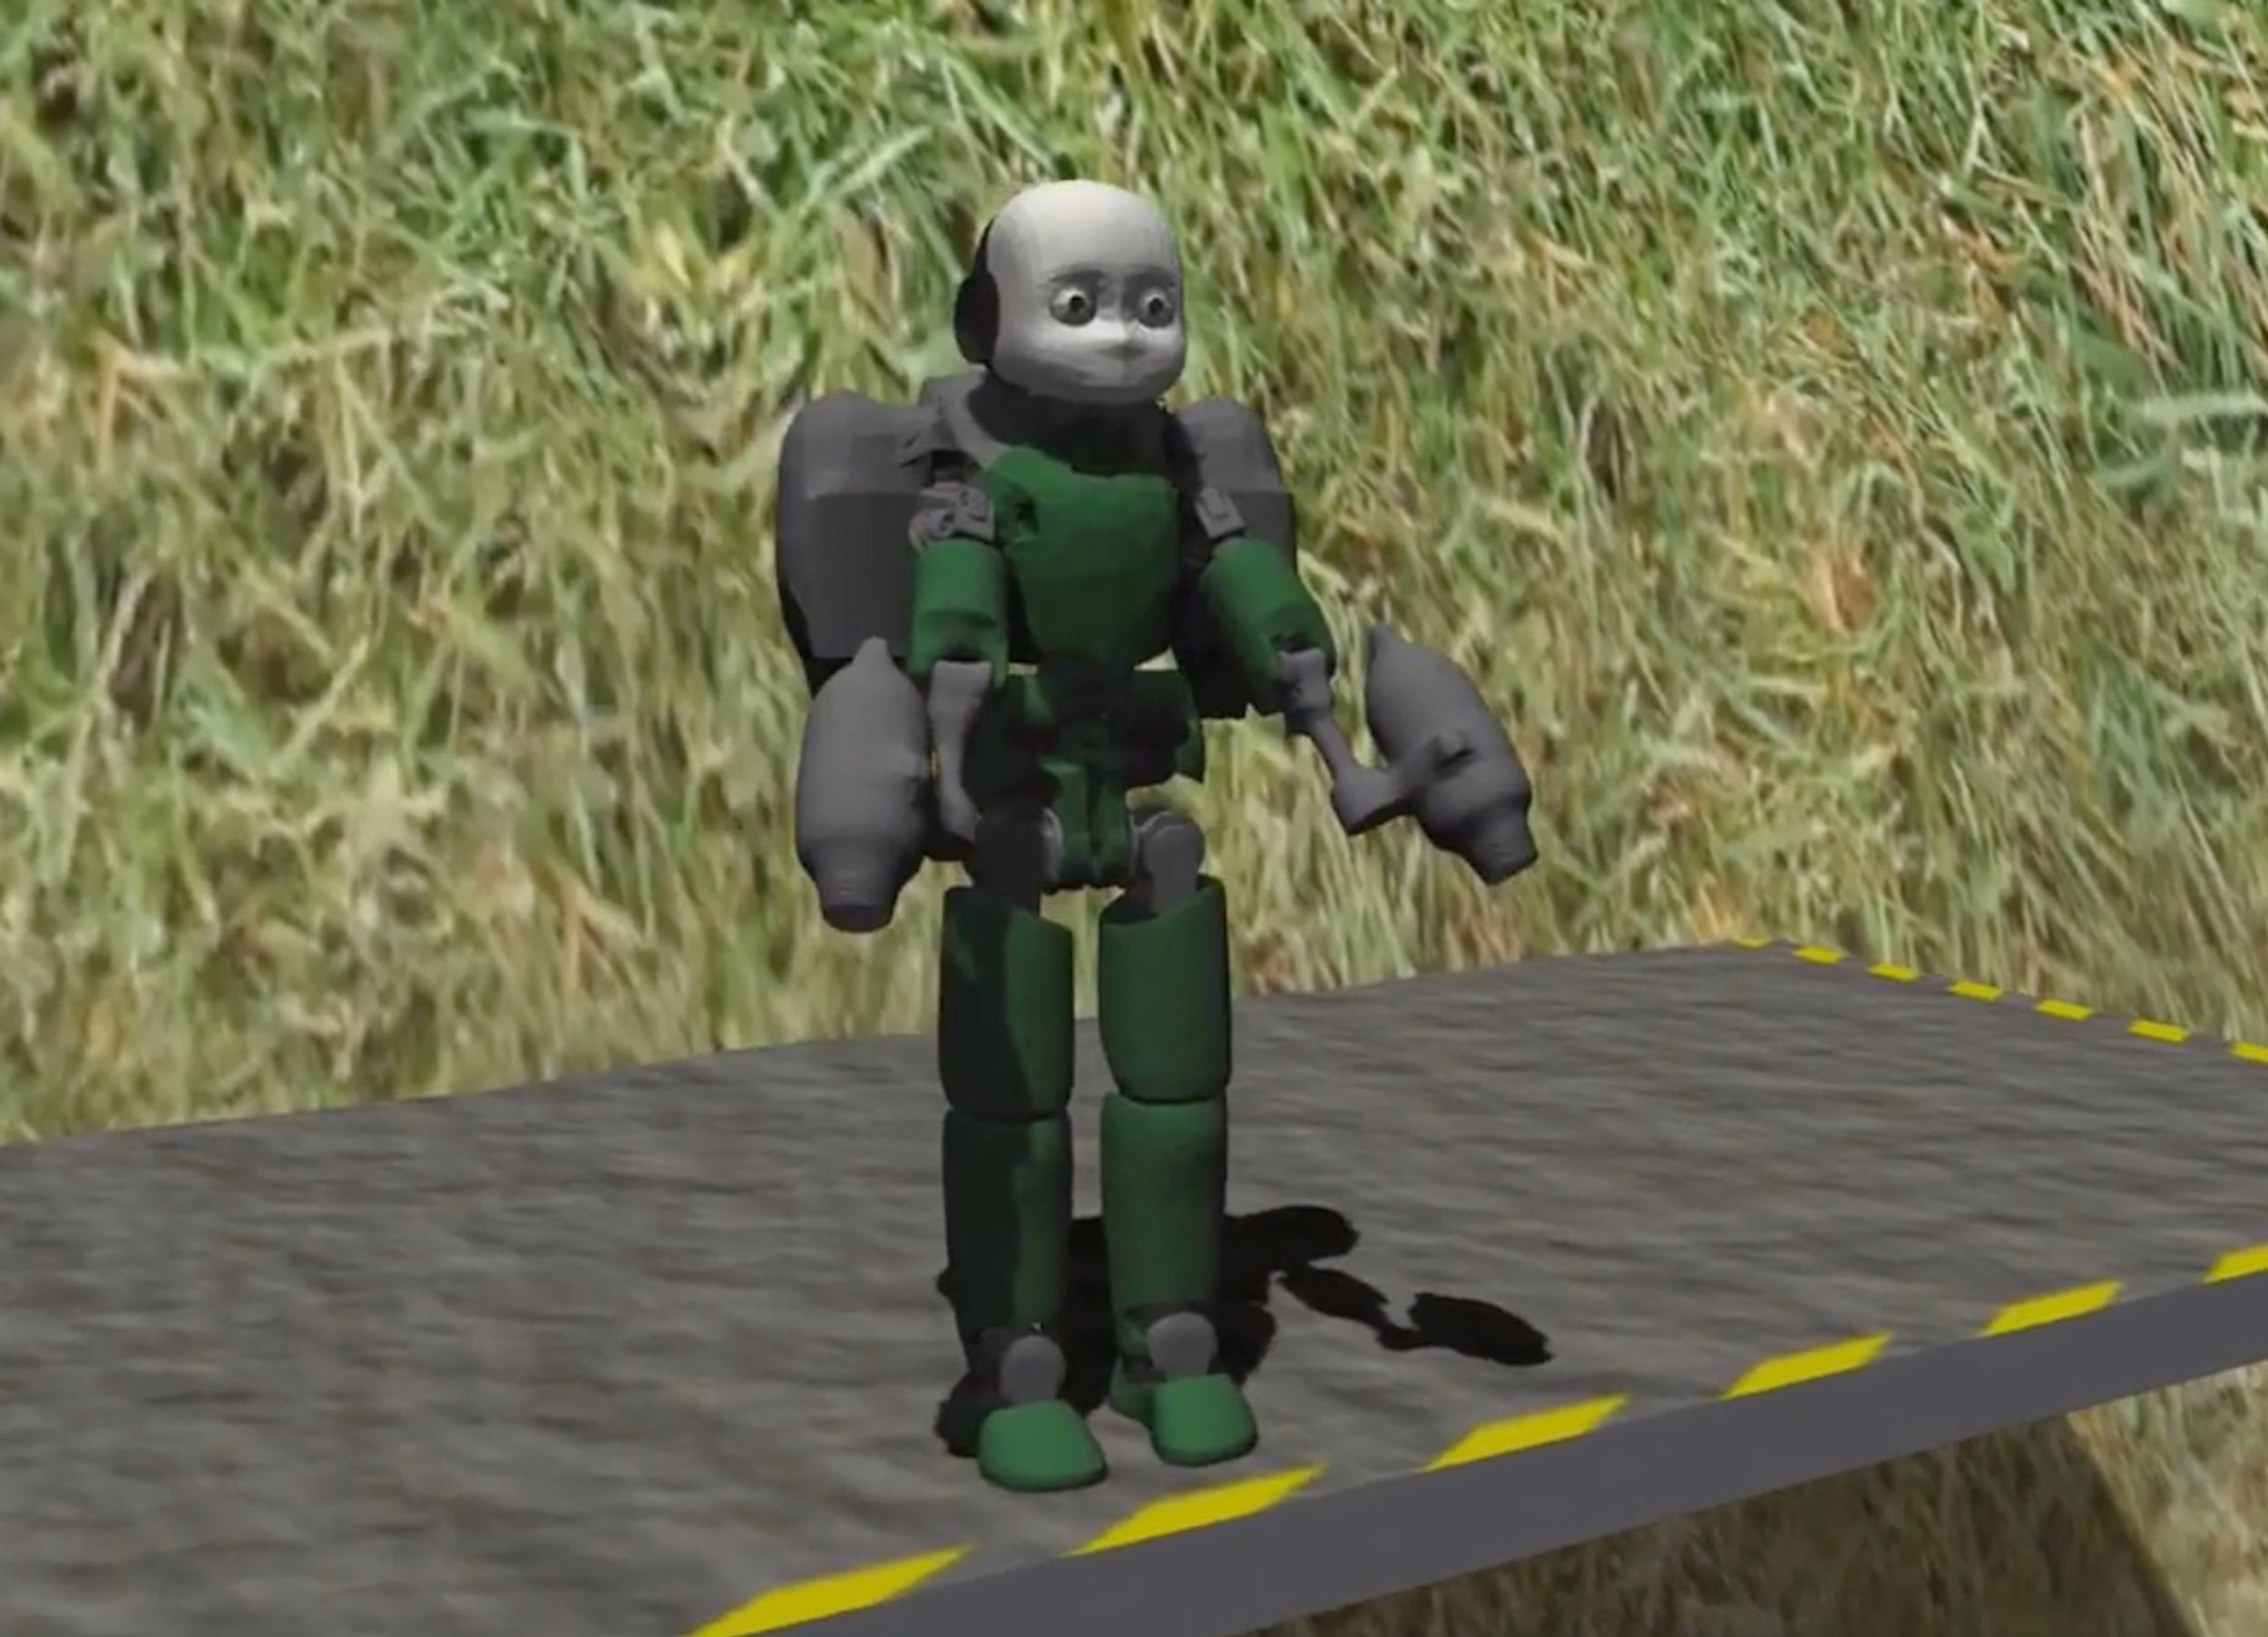 iRonCub, the jet-powered flying humanoid robot